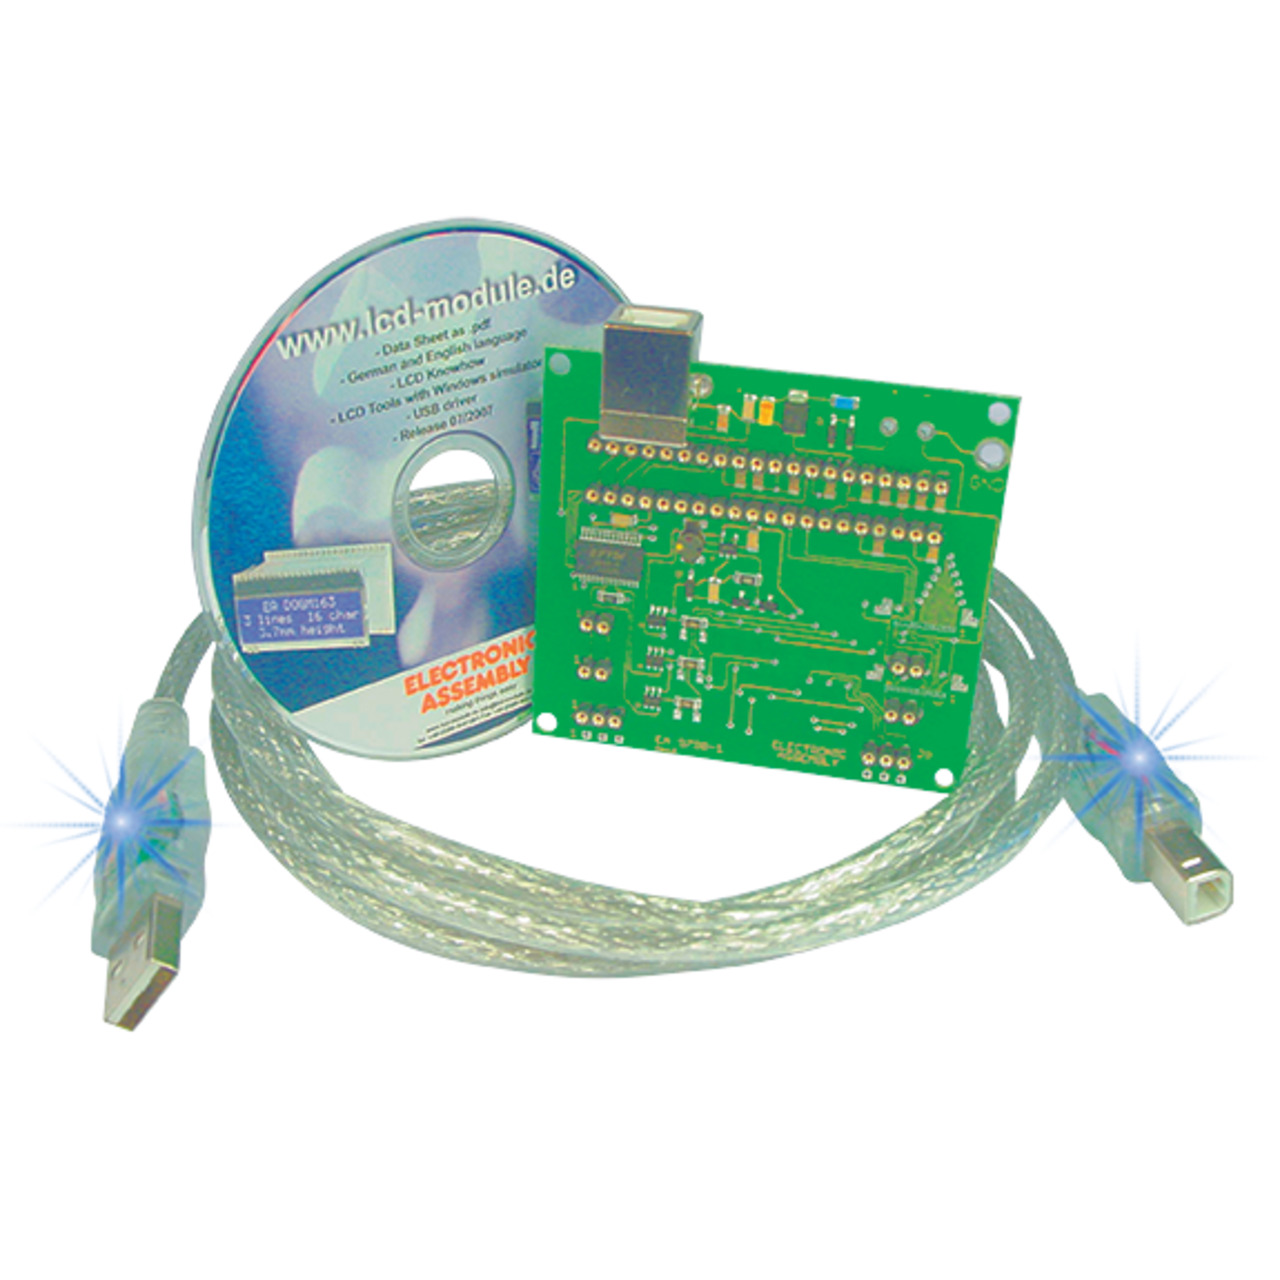 Electronic Assembly USB-Testboard für EA DOG-Serie unter Komponenten